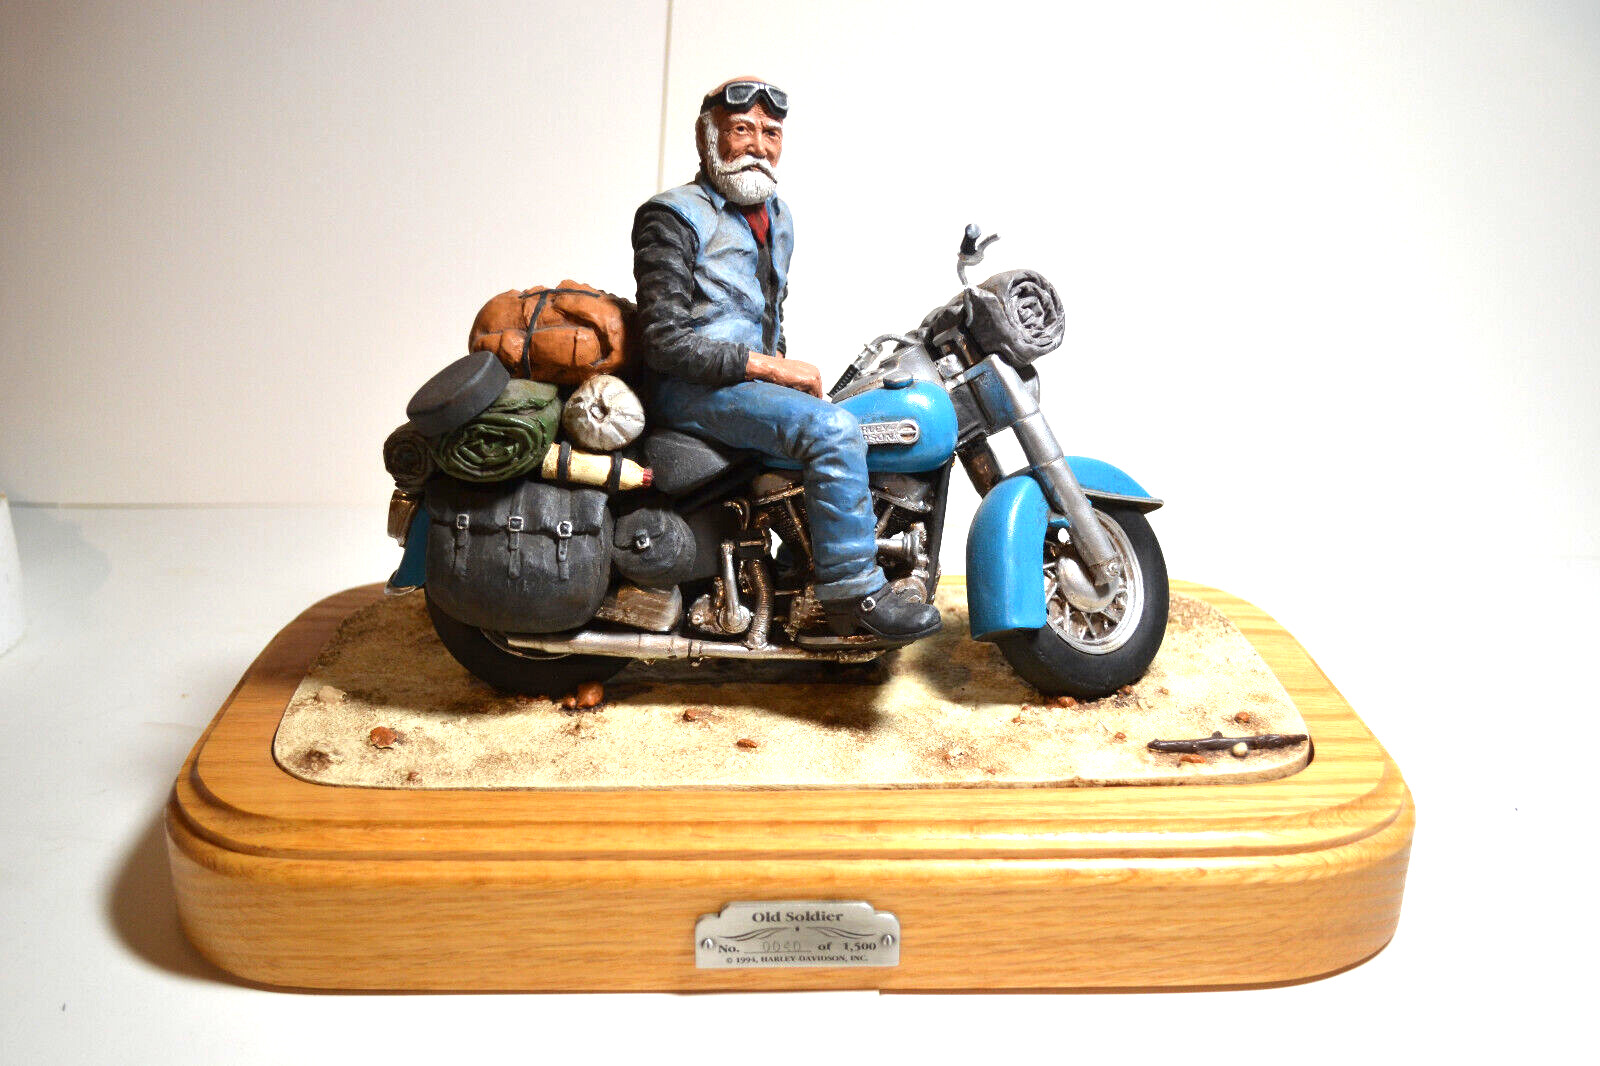 1994 Harley Davidson Mark Patrick Old Soldier  Motorcycle Sculpture 40/1500